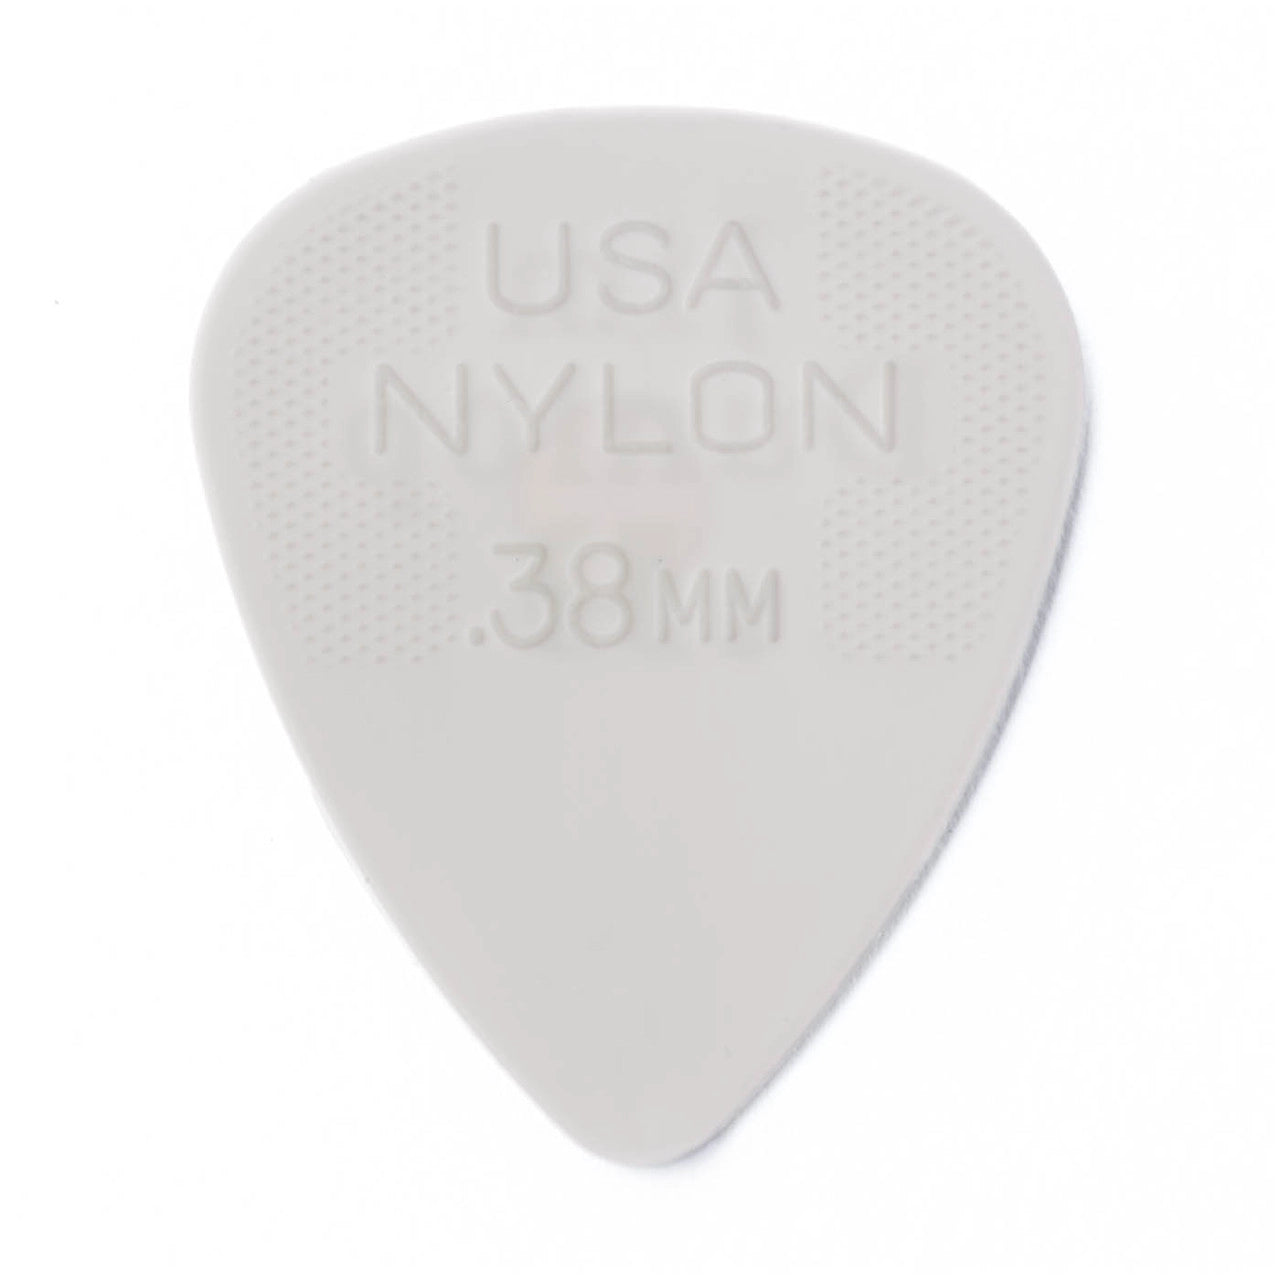 Dunlop Nylon Standard Pick .38mm